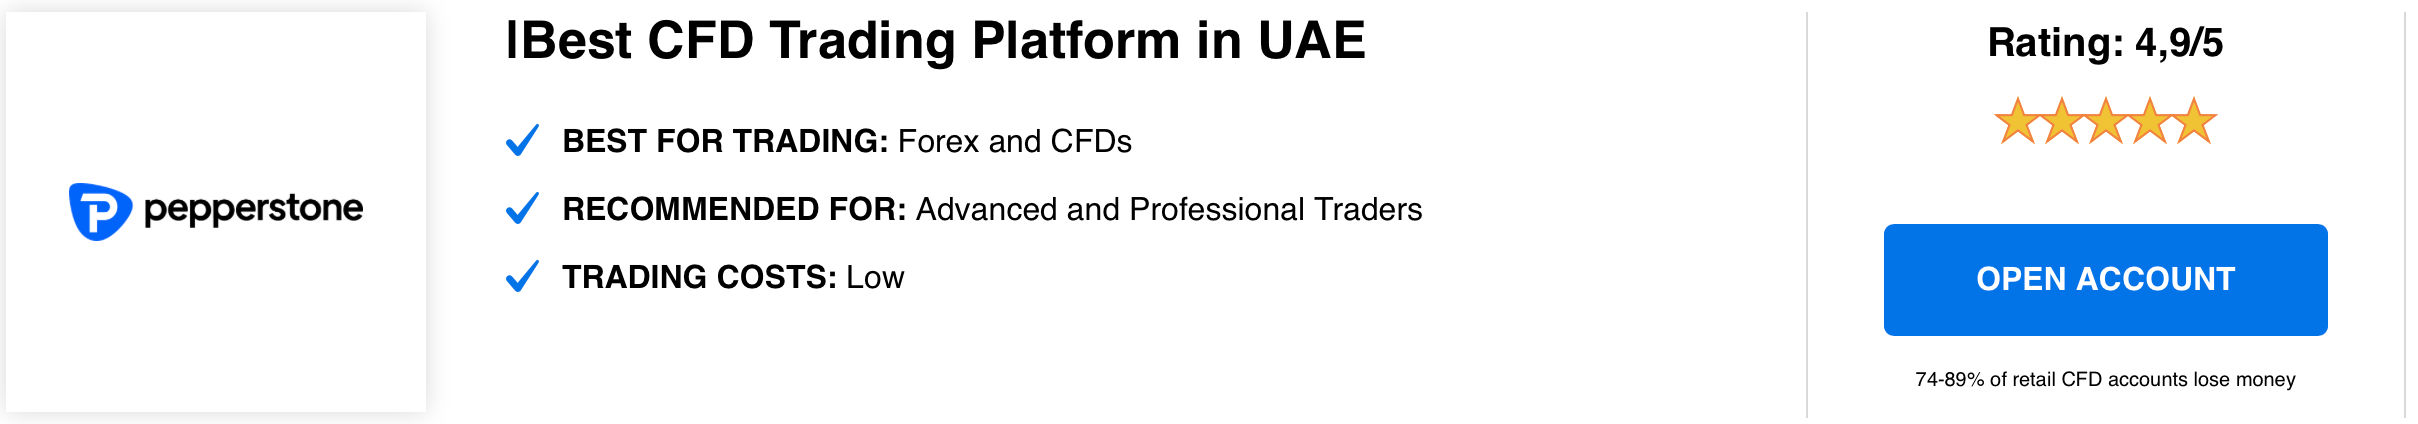 pepperstone-platform-features-in-UAE